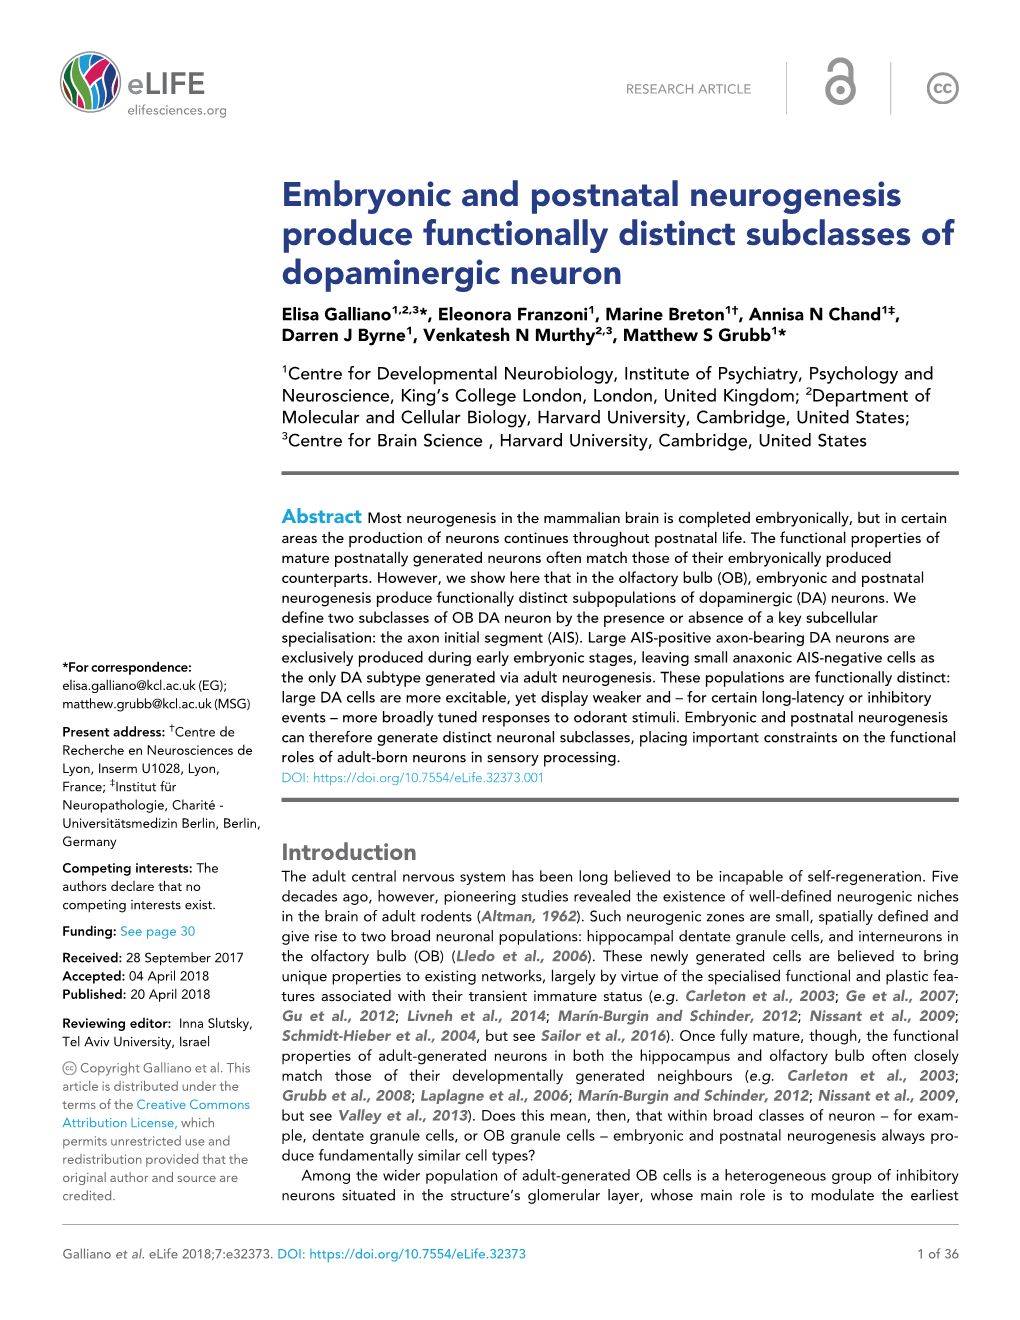 Embryonic and Postnatal Neurogenesis Produce Functionally